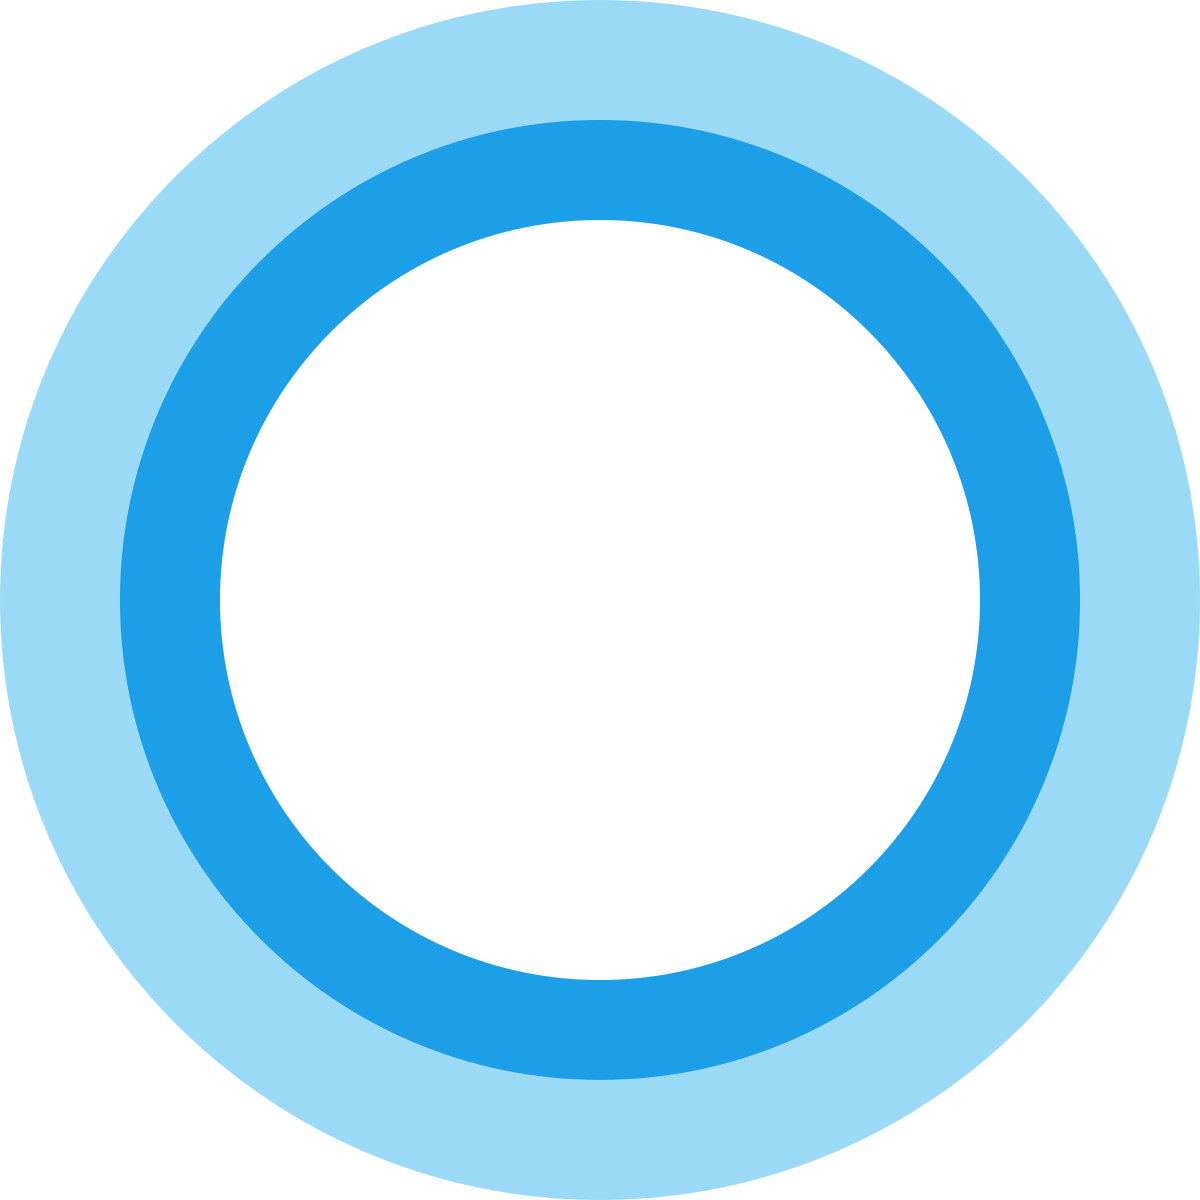 Cortana icon with a ! symbol